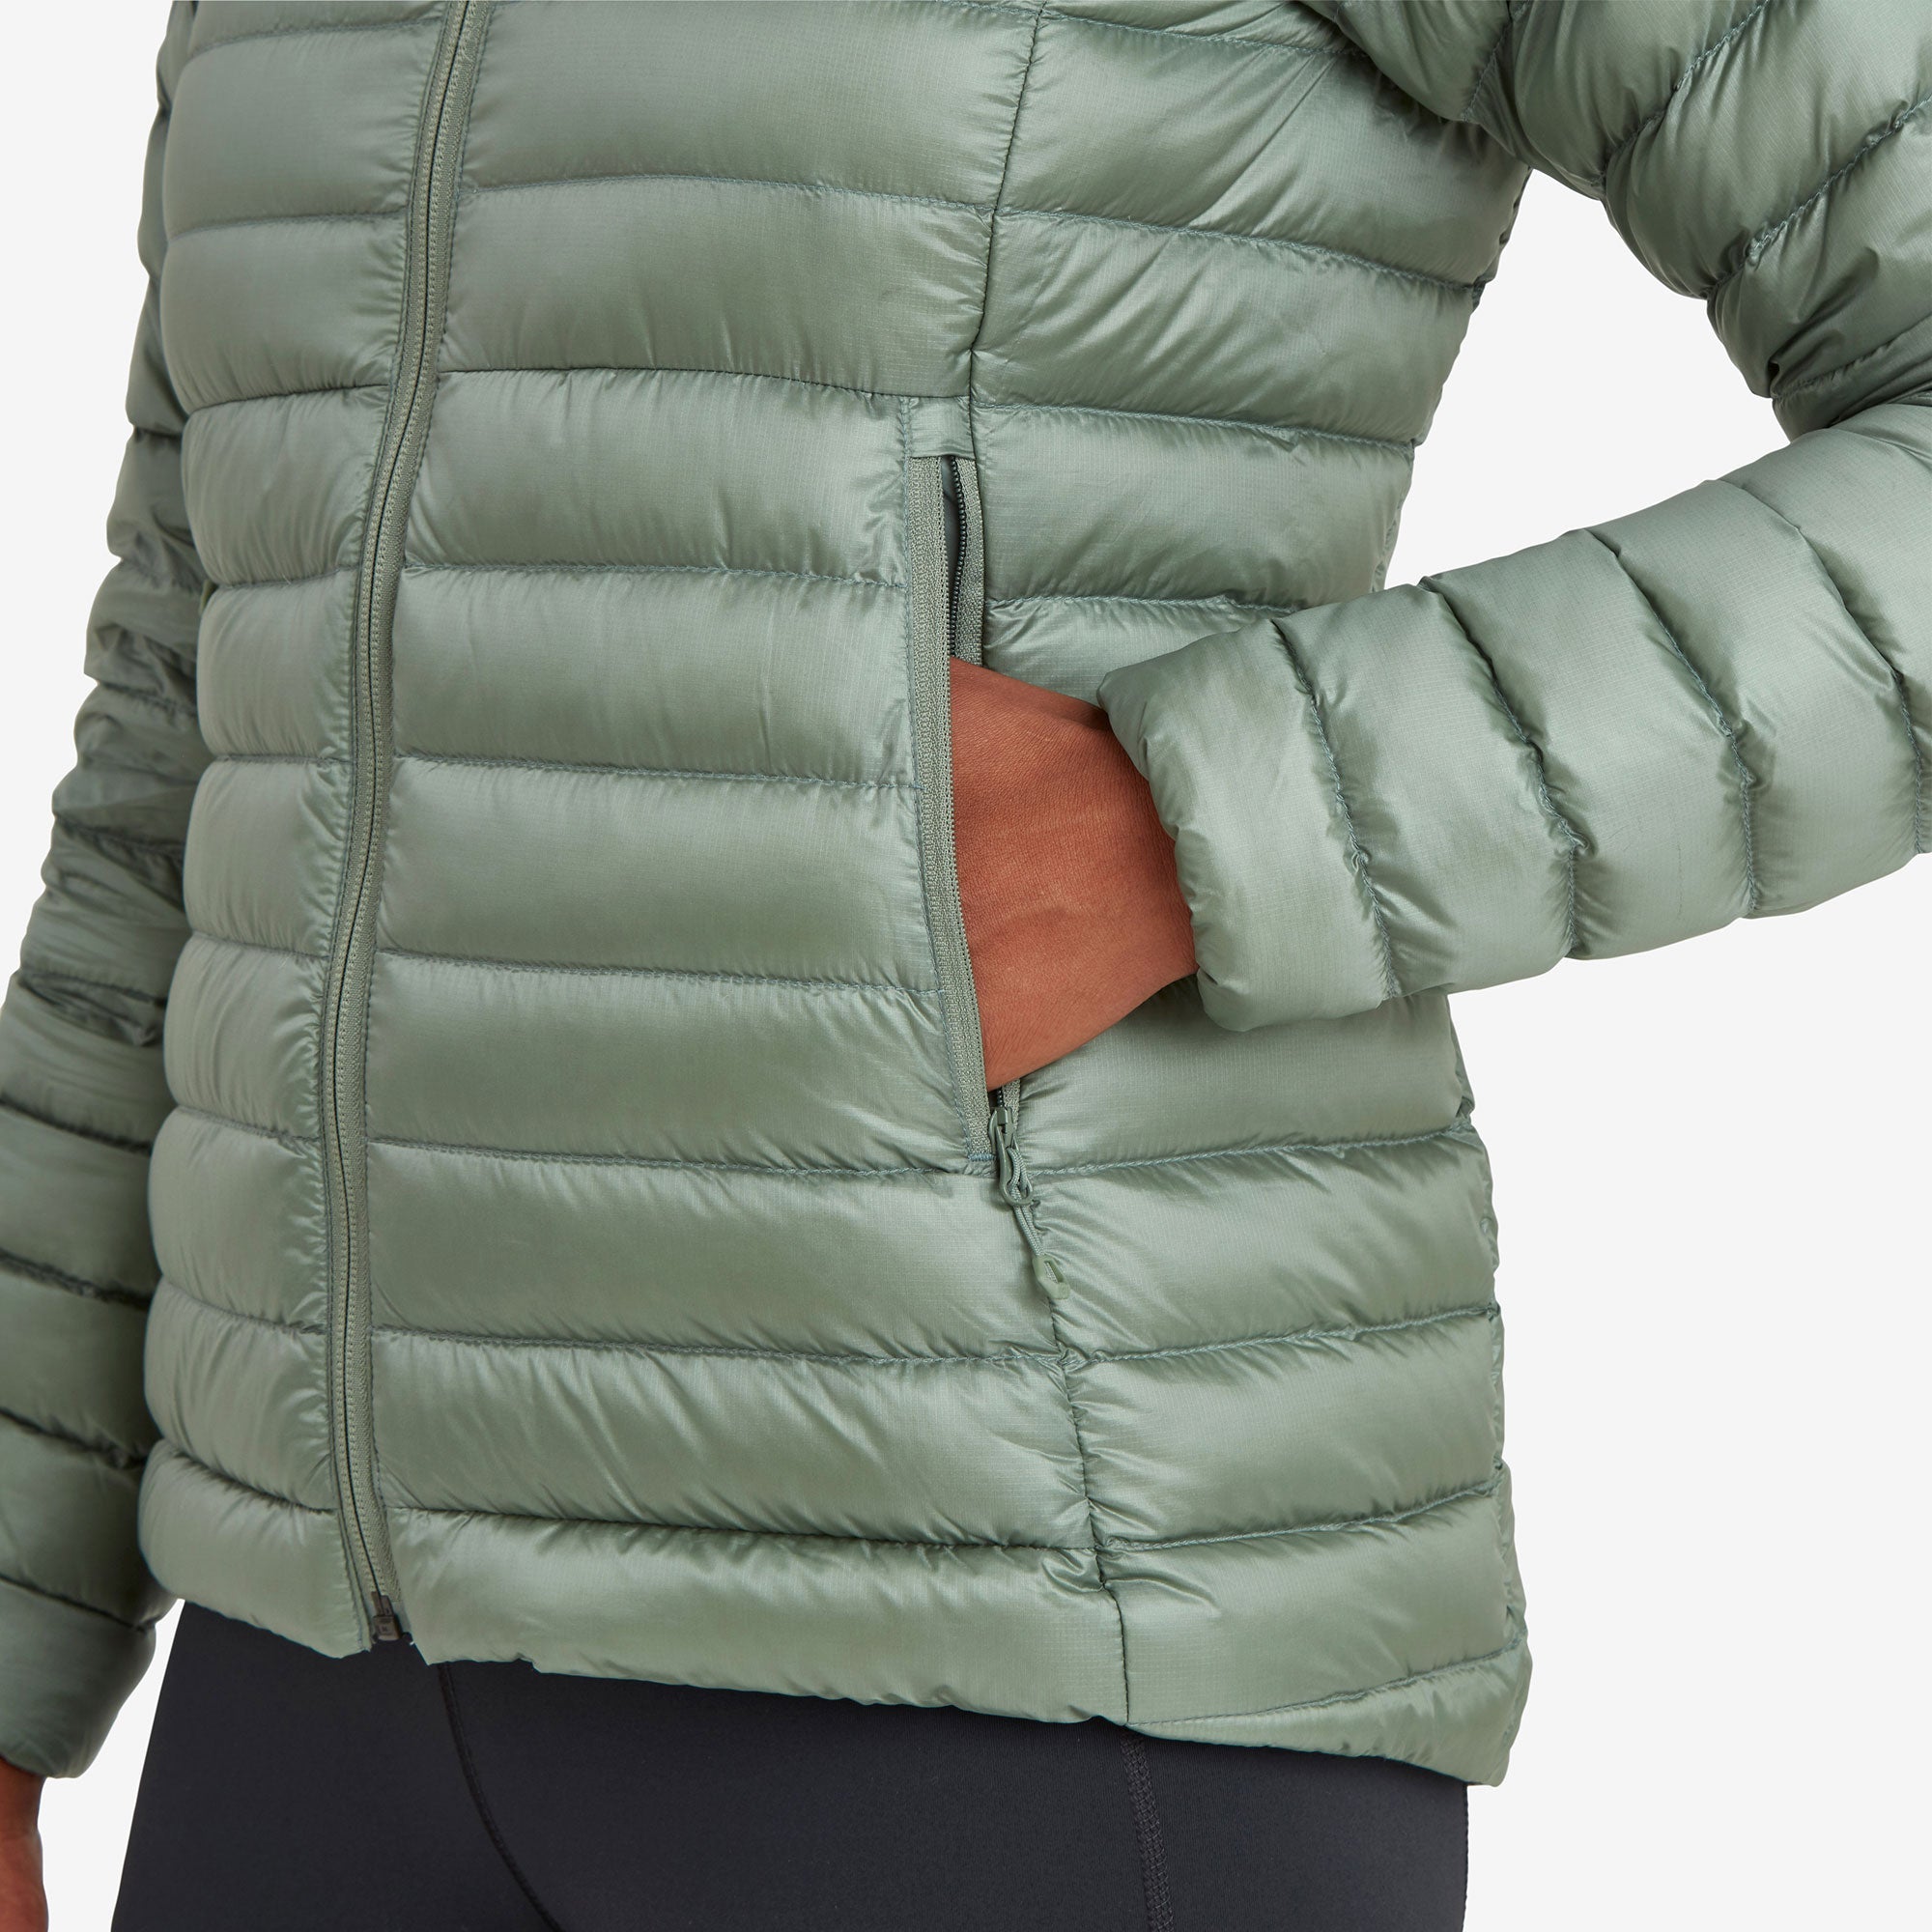 Montane Women's Anti-Freeze Hooded Down Jacket